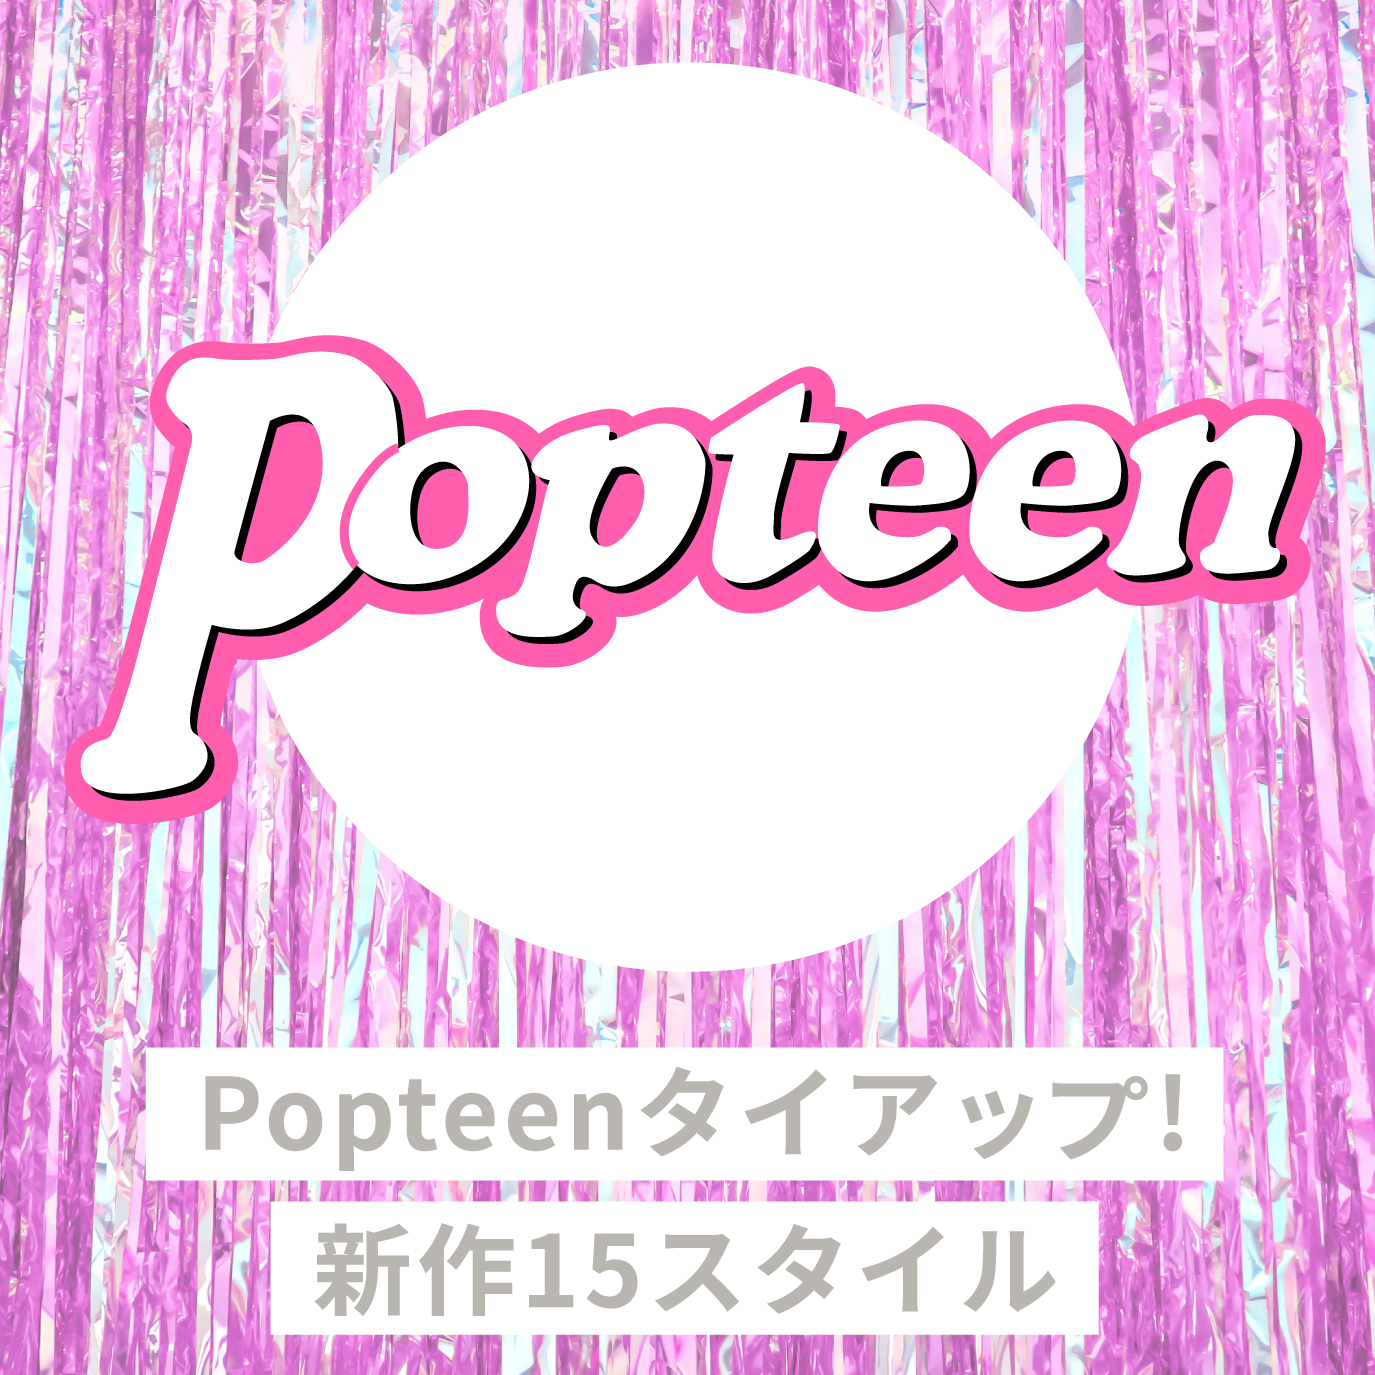 Lovetoxic Popteenスペシャルタイアップ